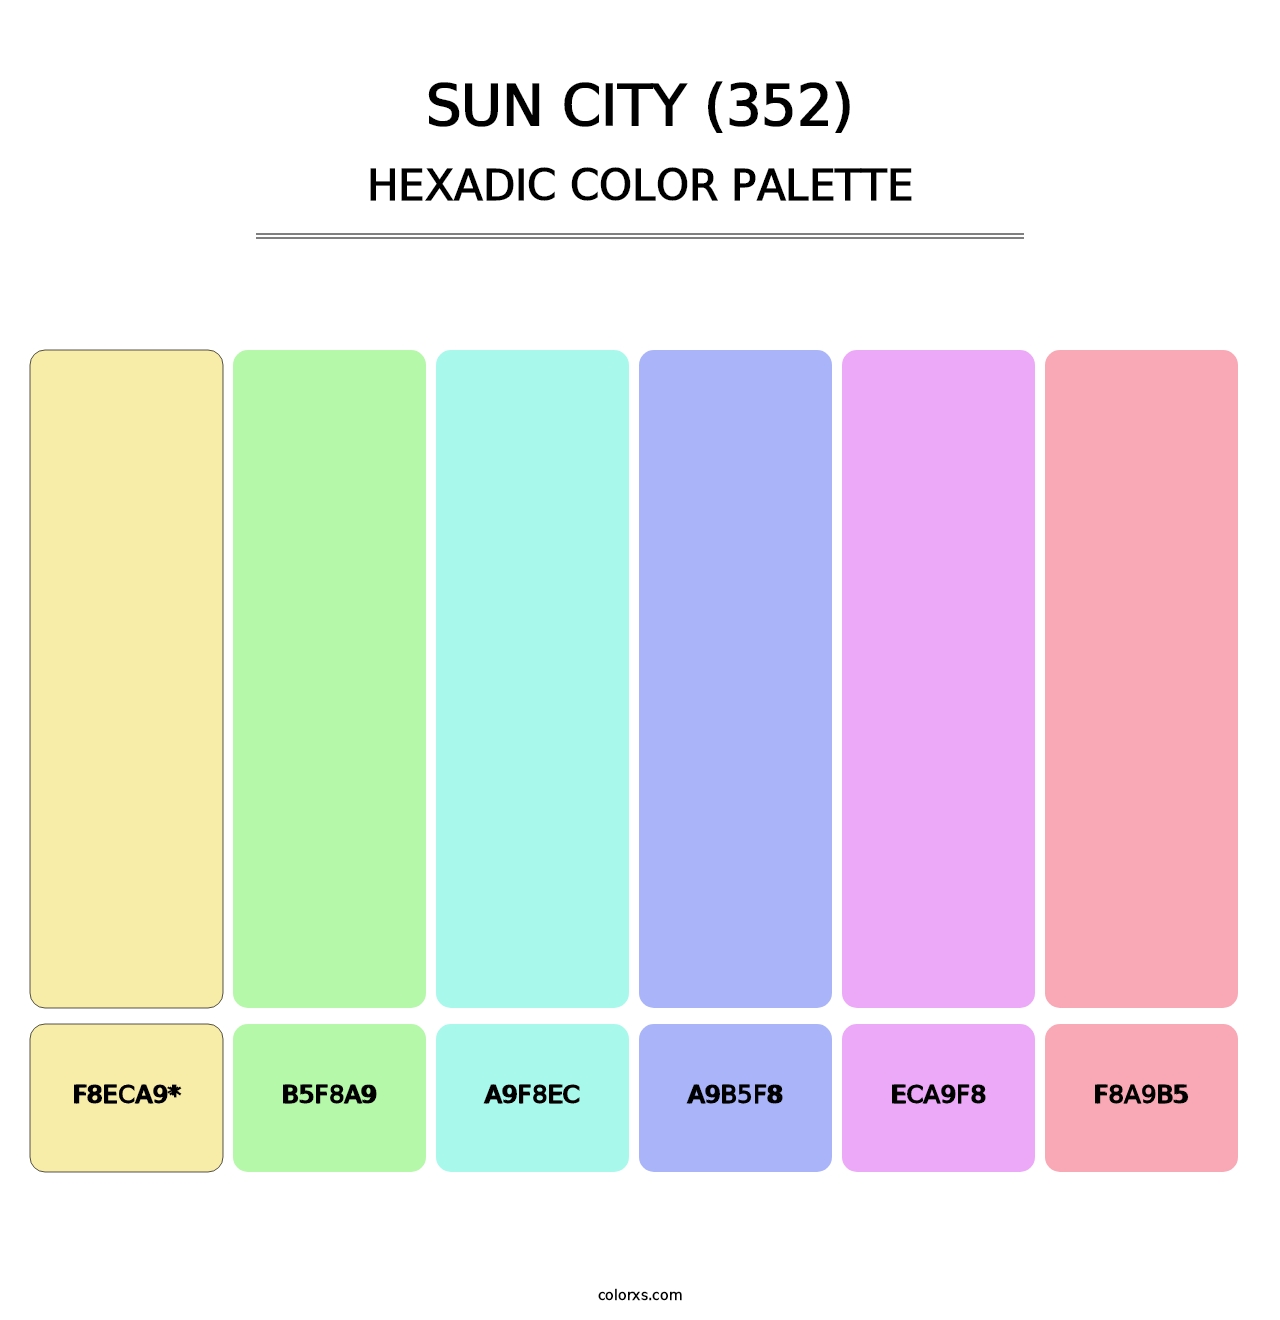 Sun City (352) - Hexadic Color Palette